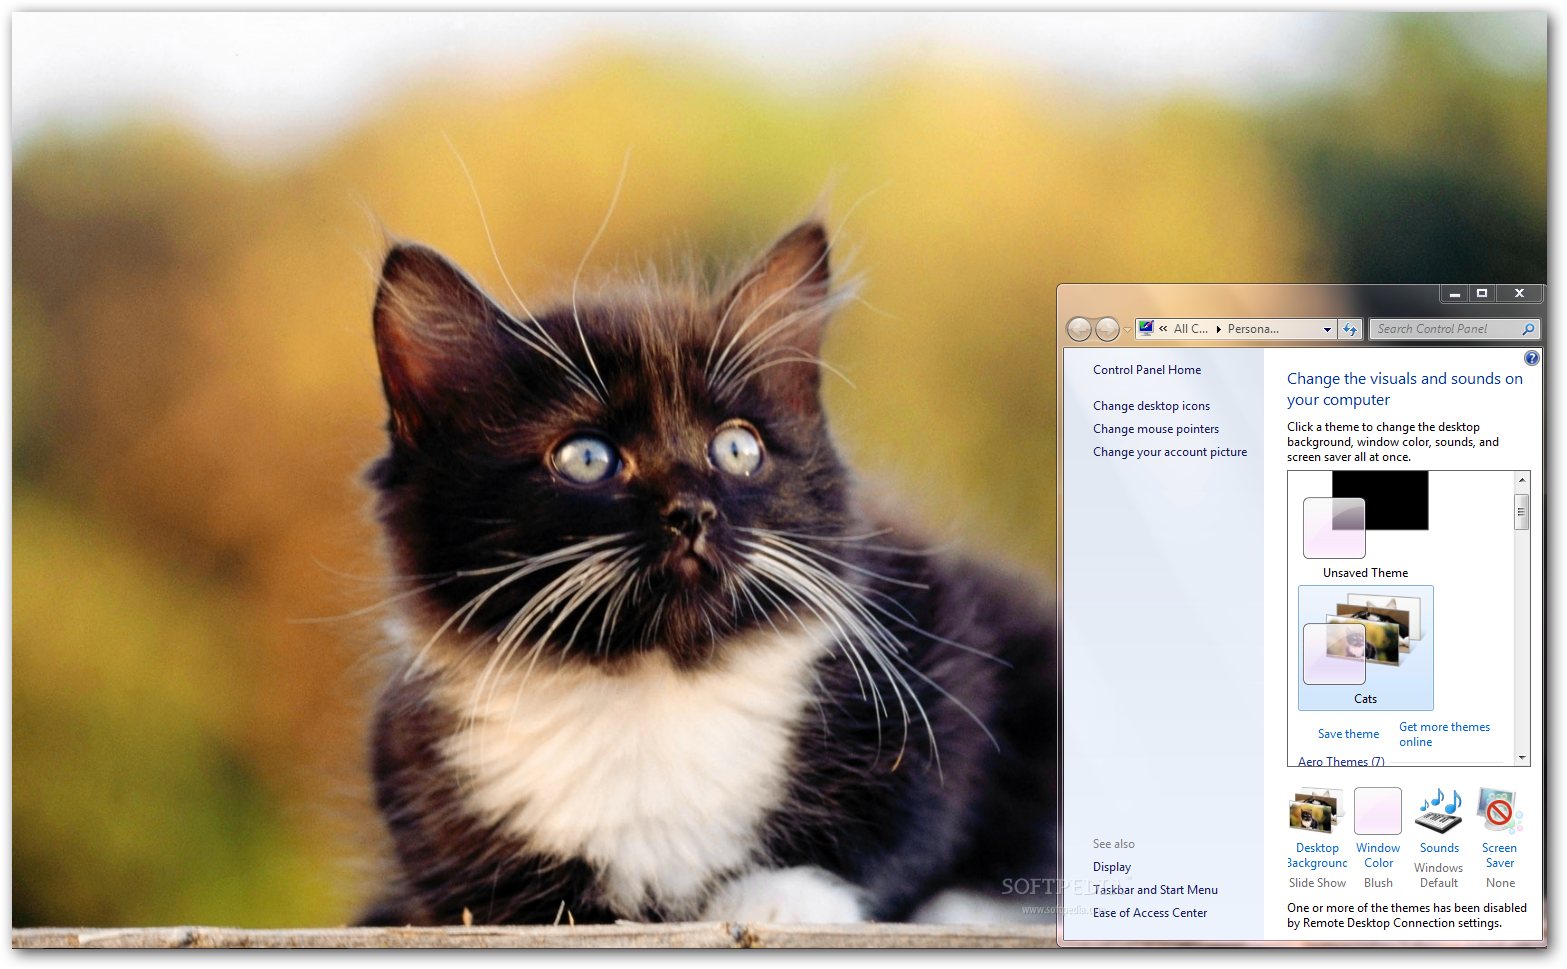 download the last version for windows Catsxp 3.10.4